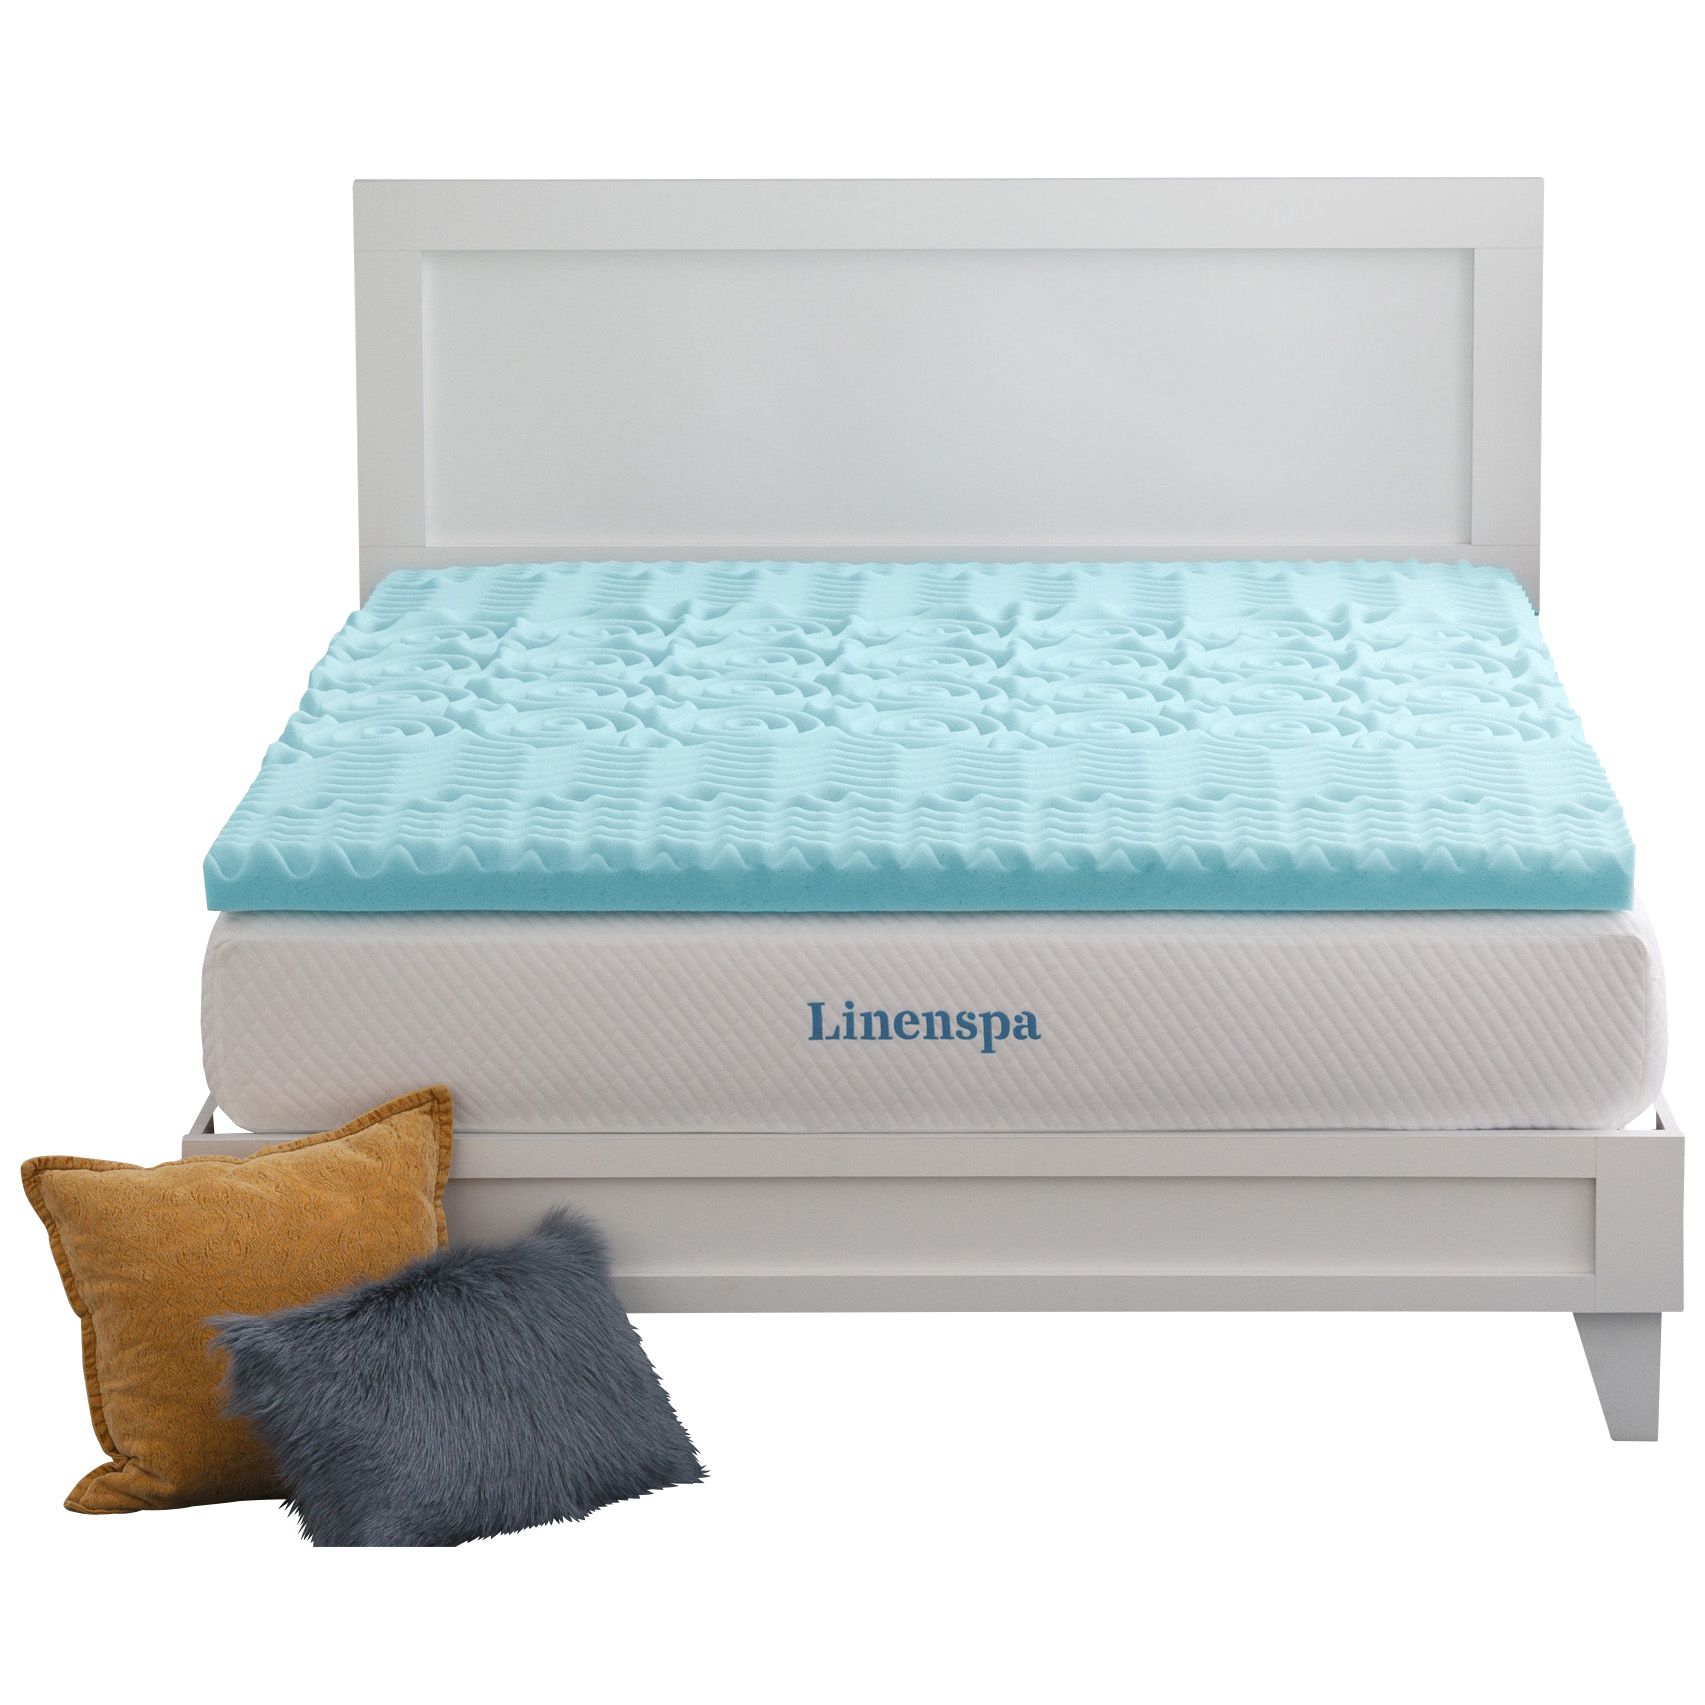 Linenspa Essentials 2 5-Zone Gel Memory Foam Mattress Topper